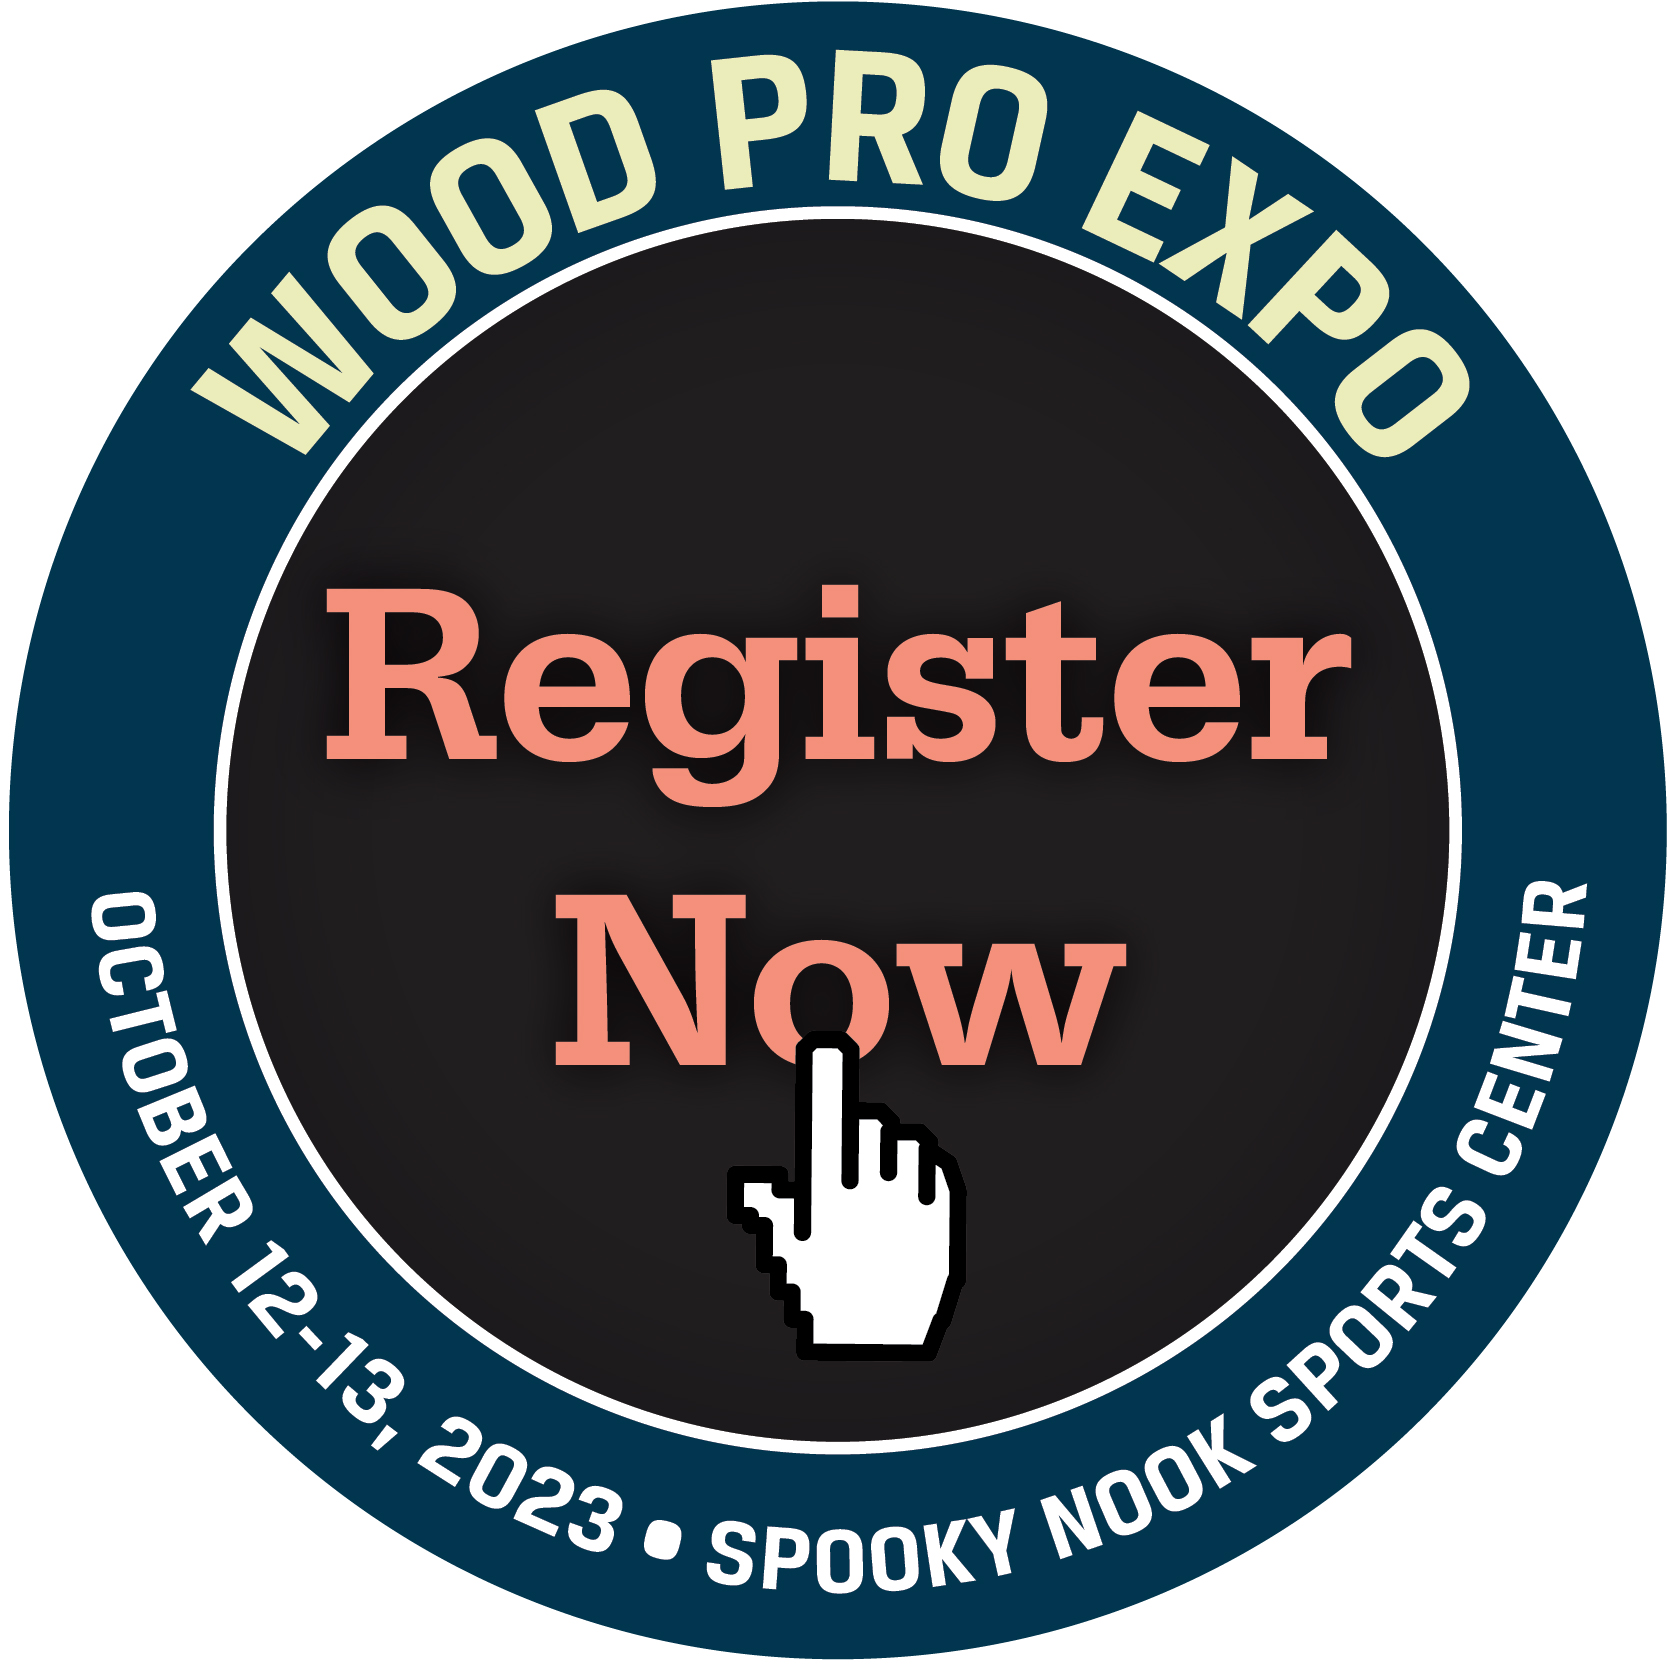 2023 Wood Pro Expo Lancaster Registration